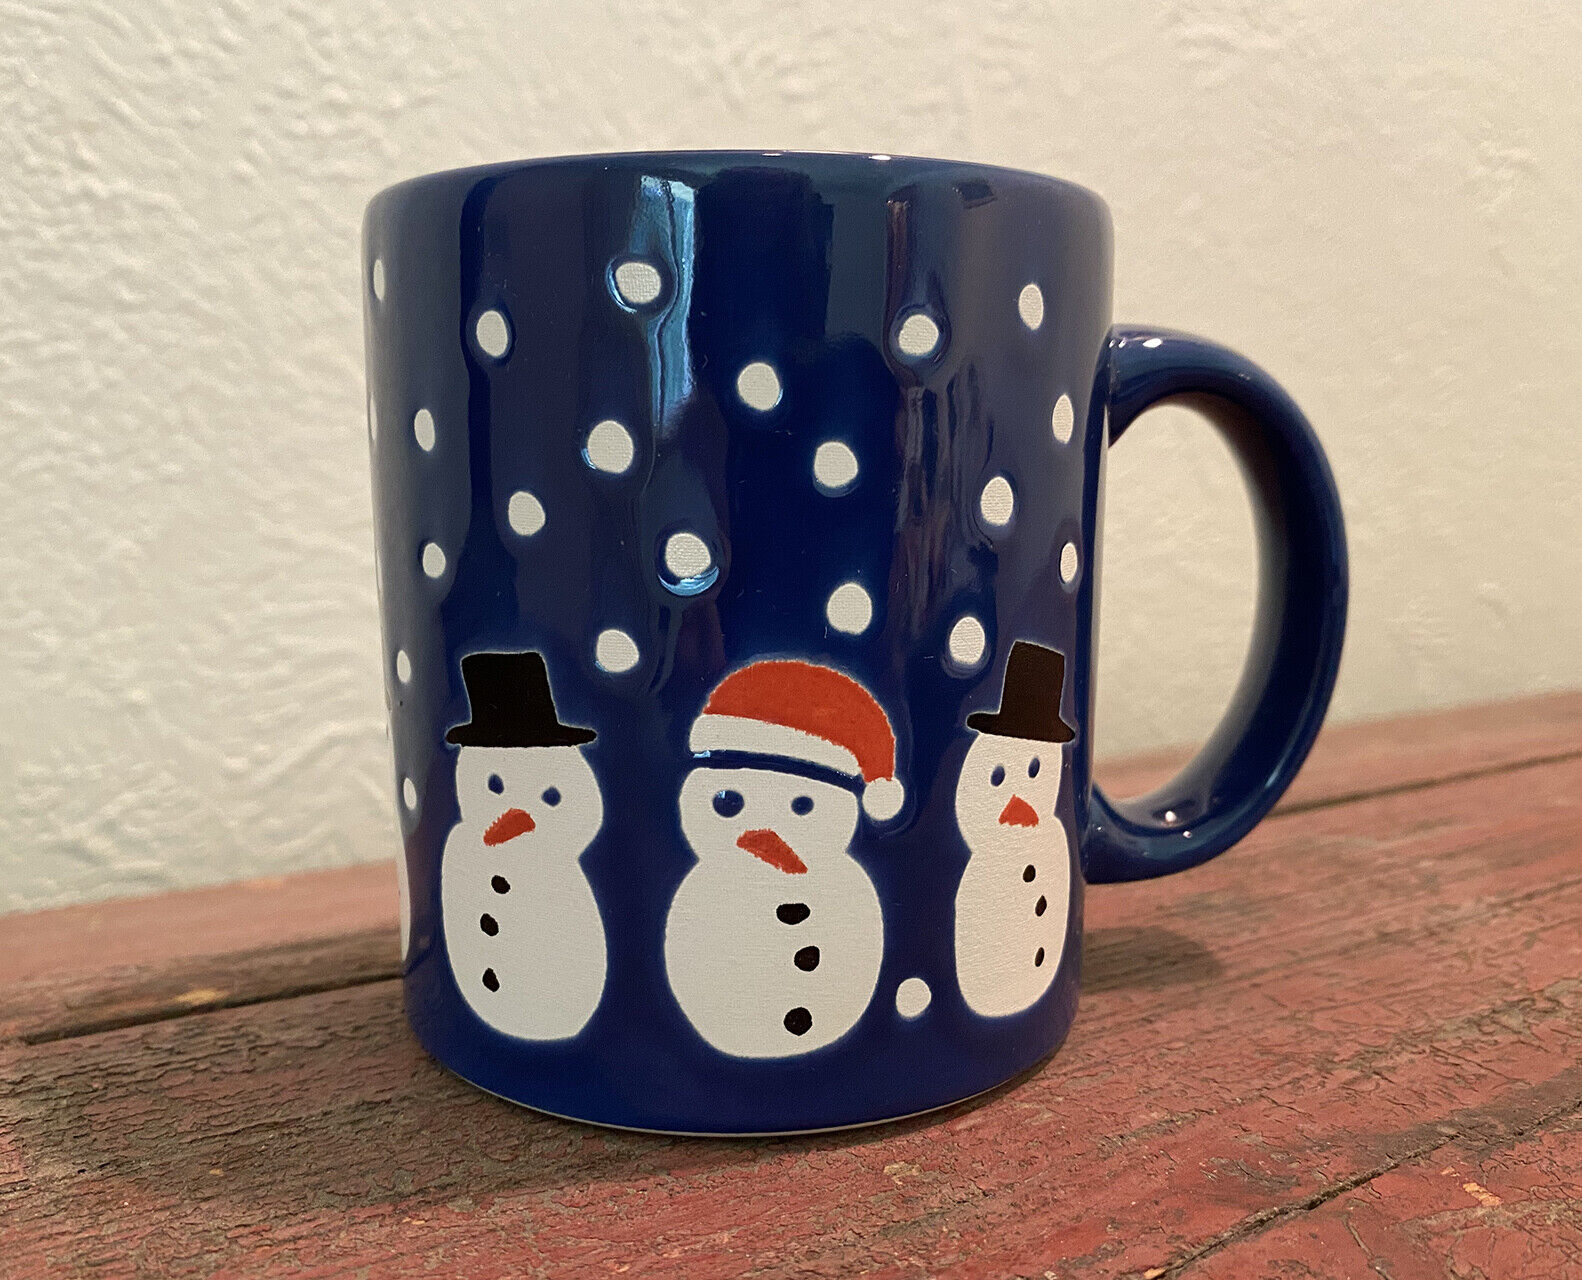 Waechtersbach Xmas Coffee Mug Snowmen Santa Snowman on Blue Made in Germany